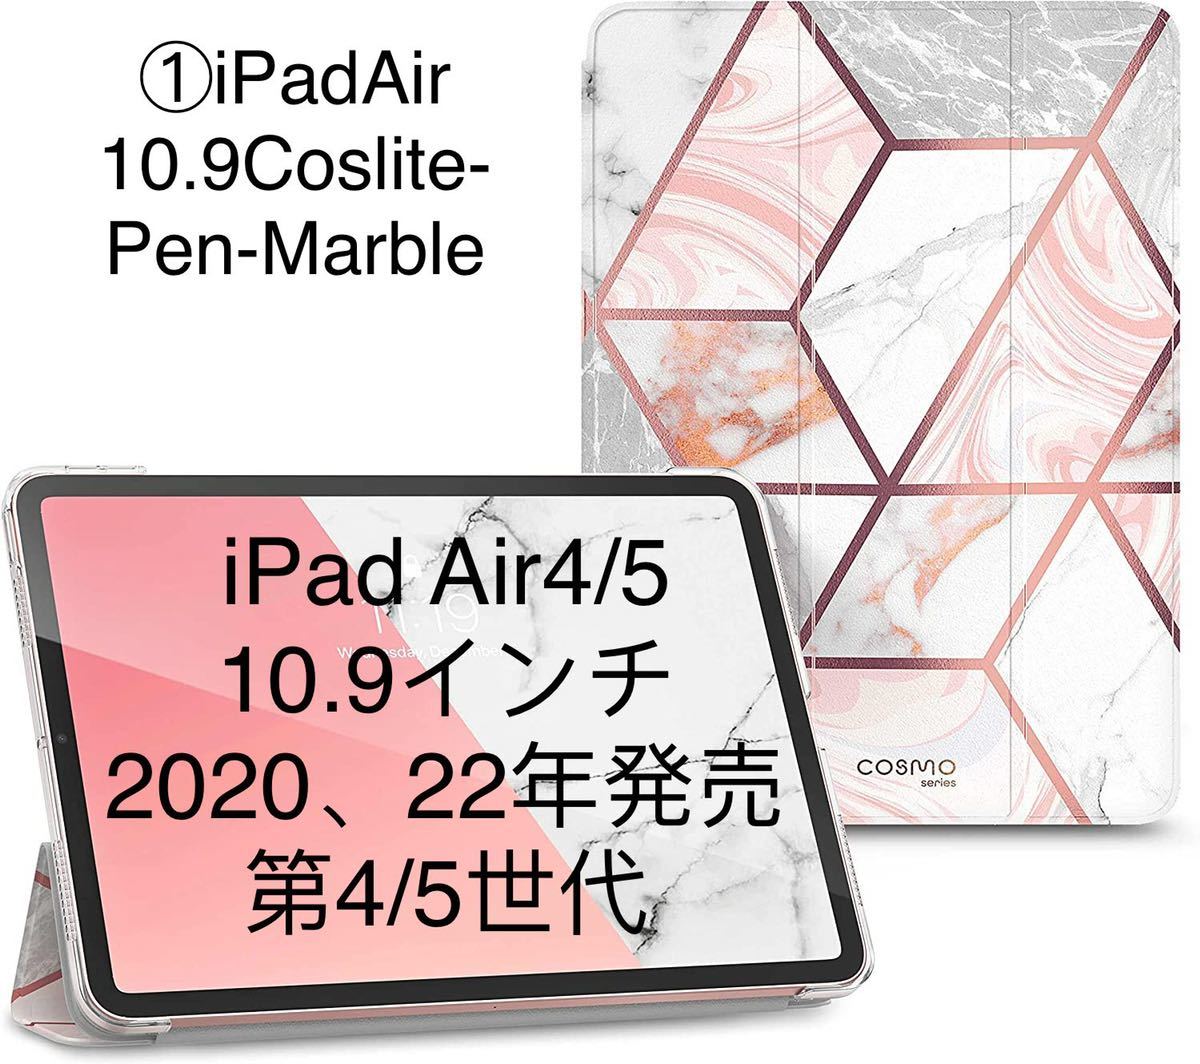 iPad Air4/510.9 case beautiful iPad no. 4/5 generation [01]